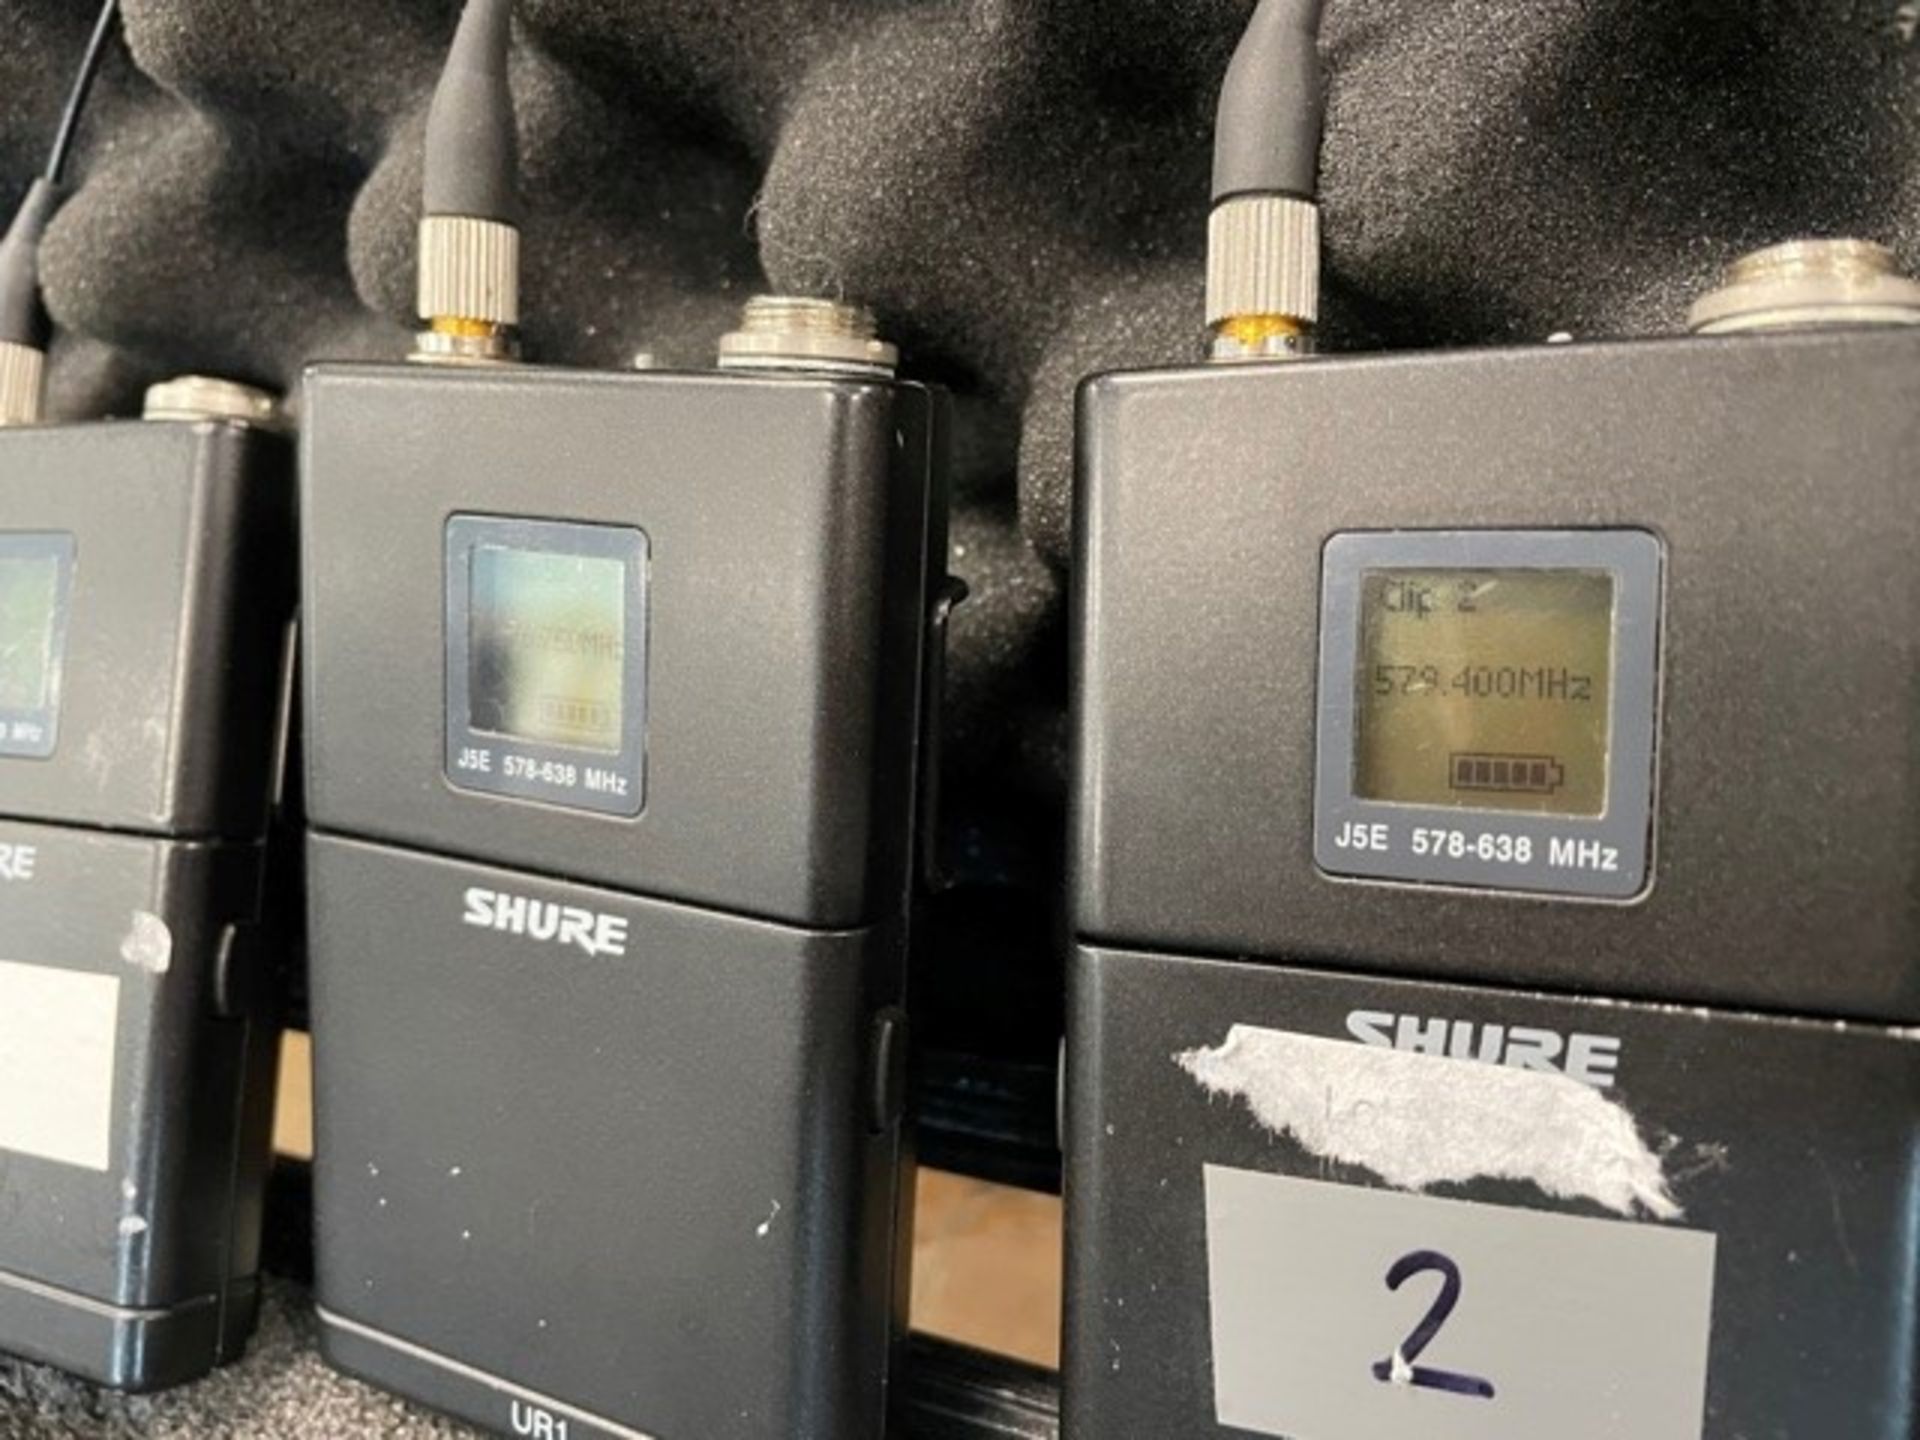 4 x Shure UR1 Transmitters In Plastic Case - Frequency Range: J5E - Ref: 402 - Image 2 of 6